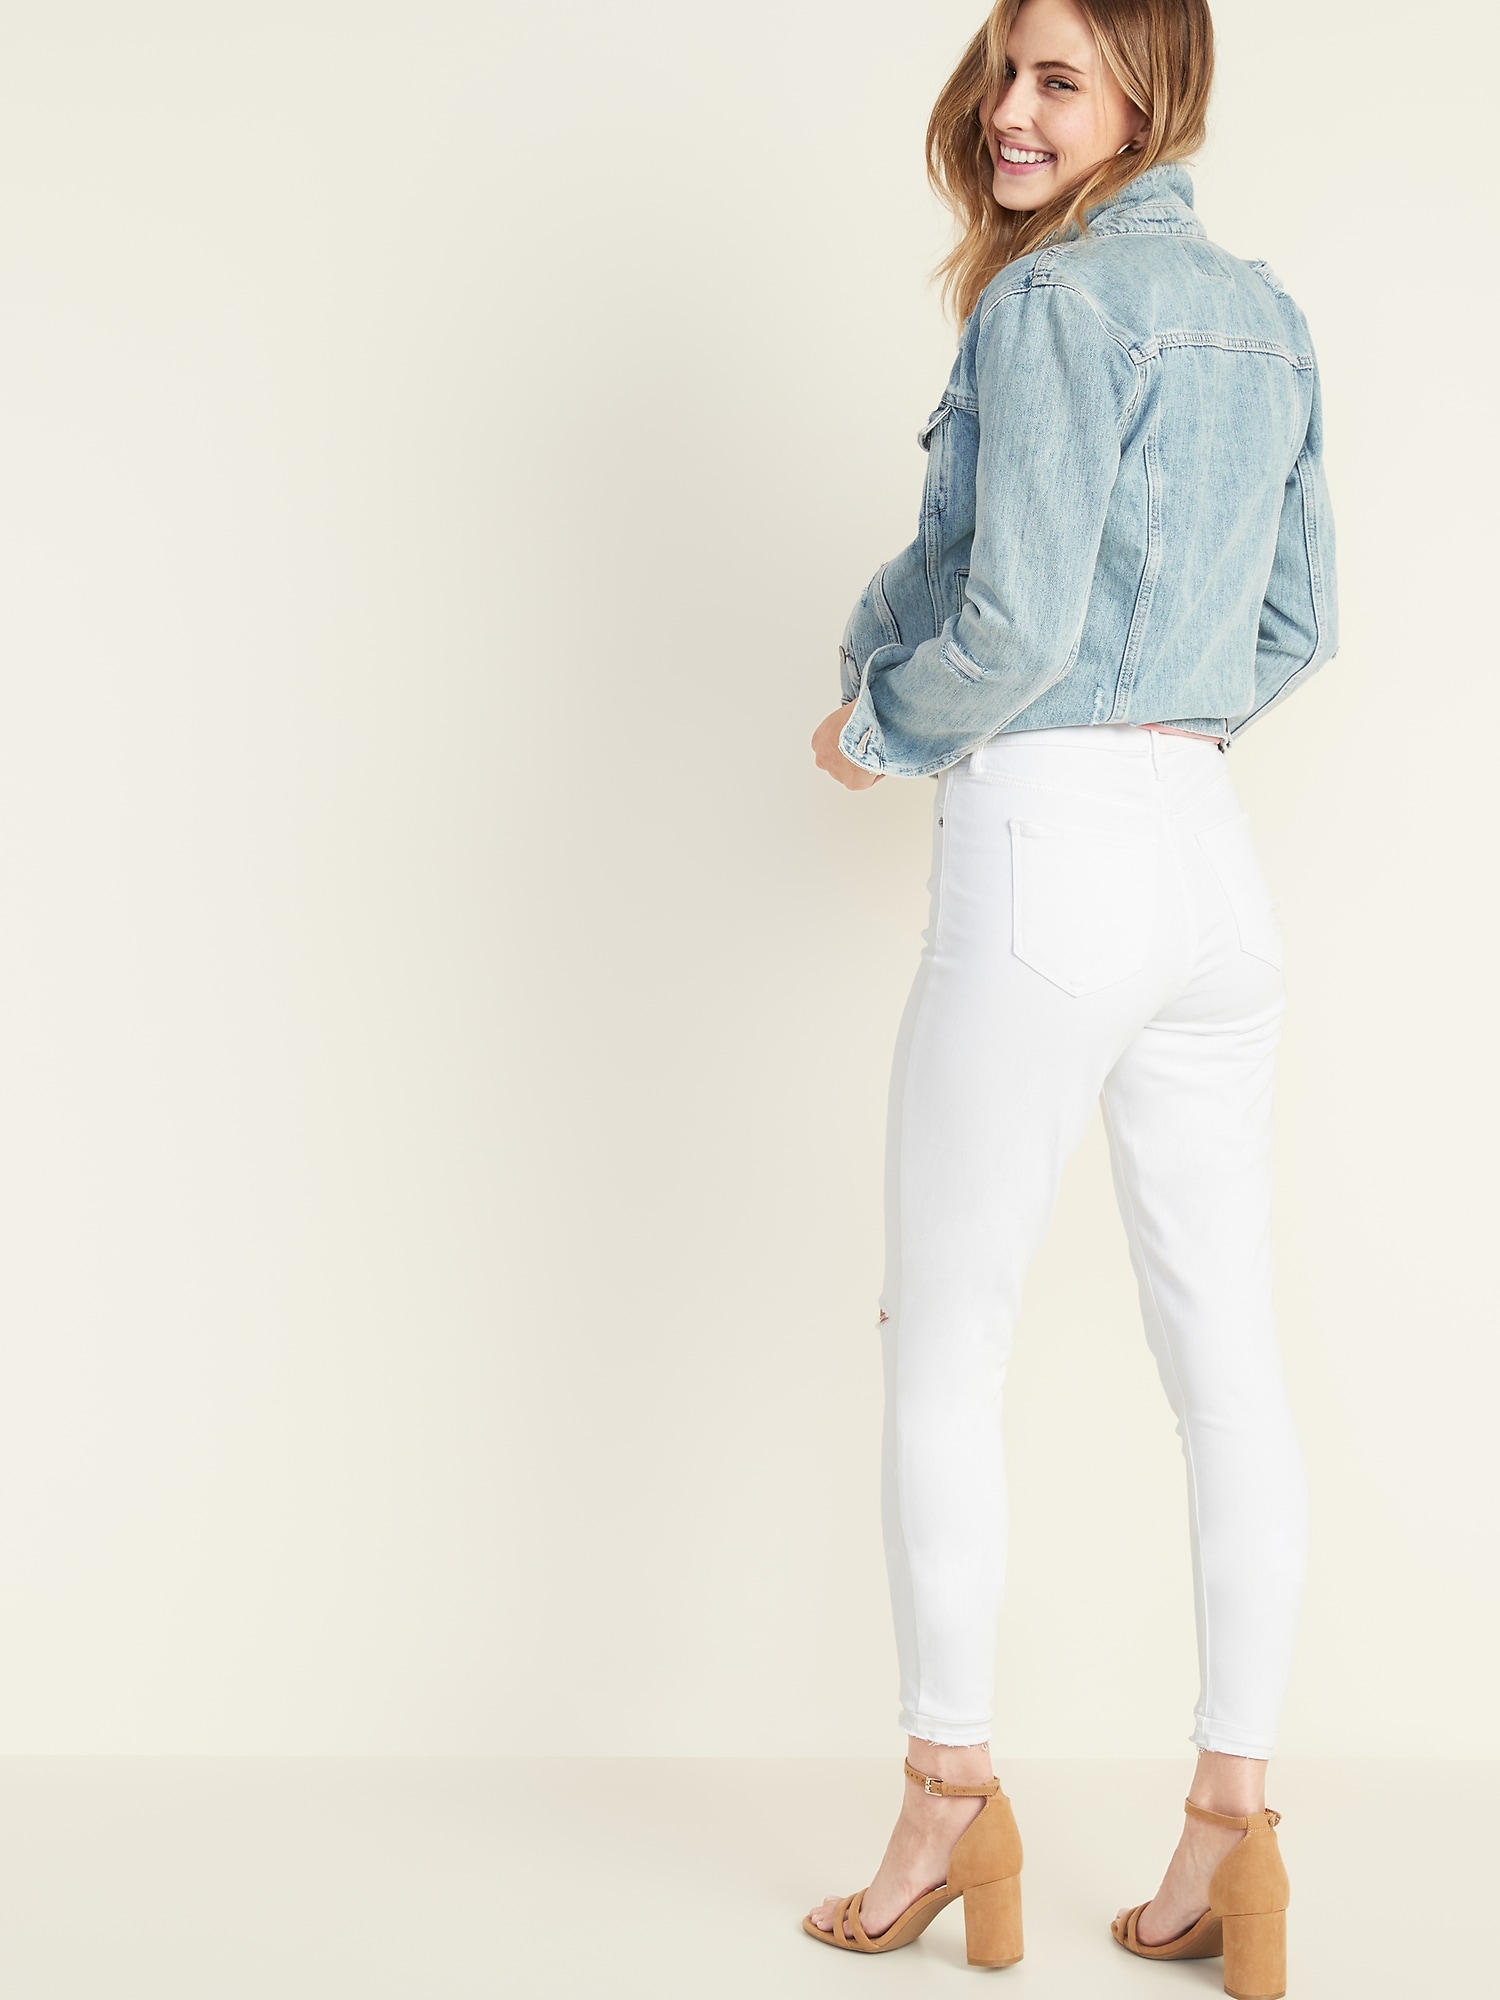 old navy rockstar white skinny jeans